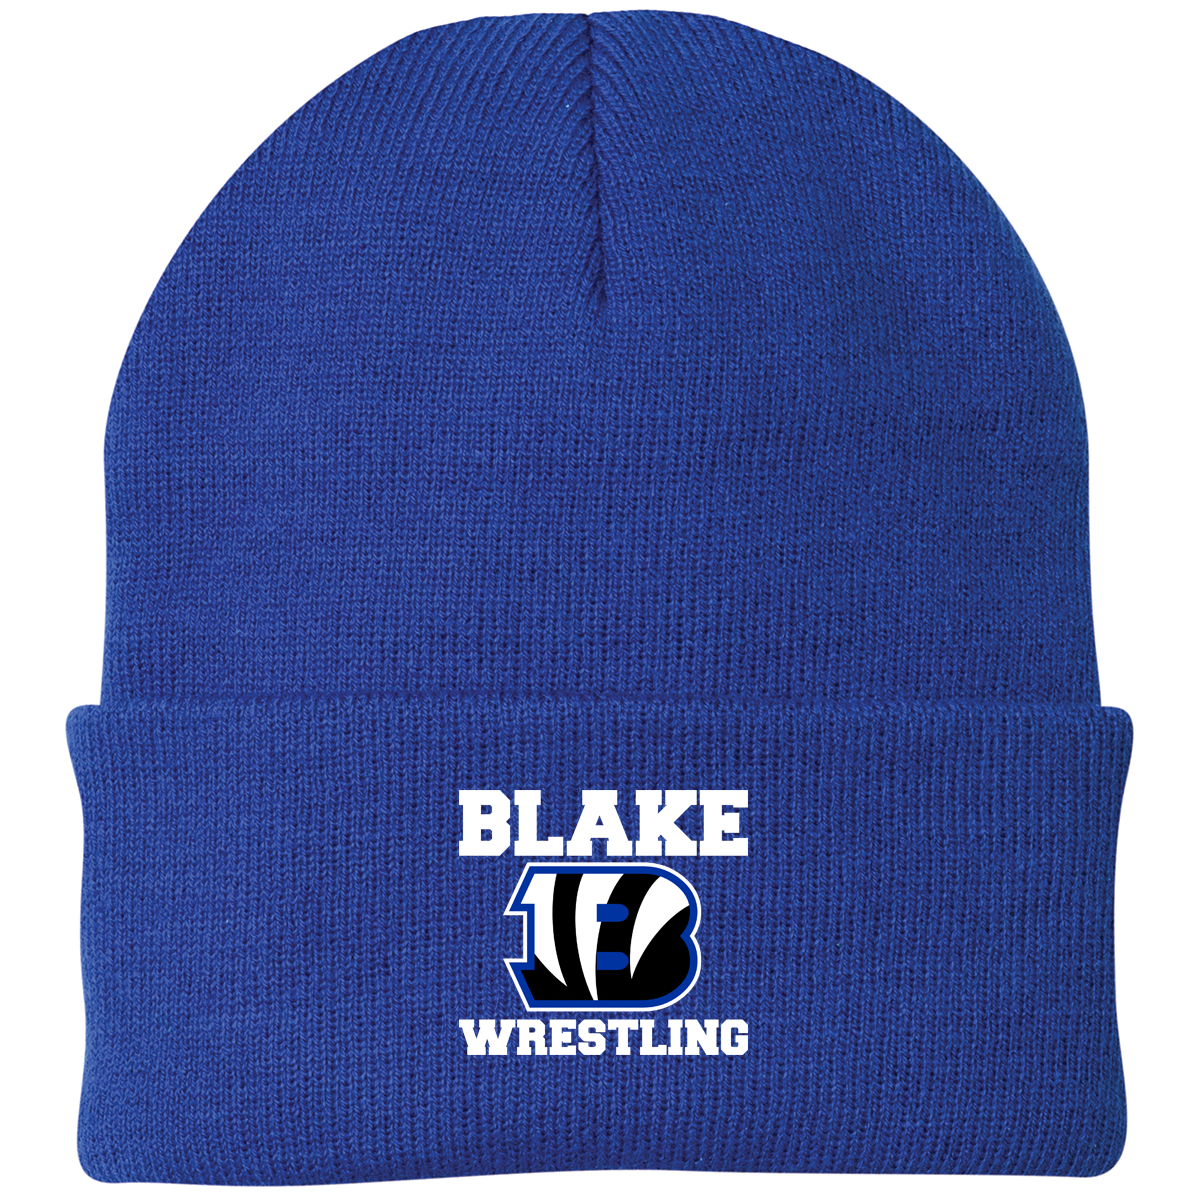 Blake Wrestling Knit Beanie